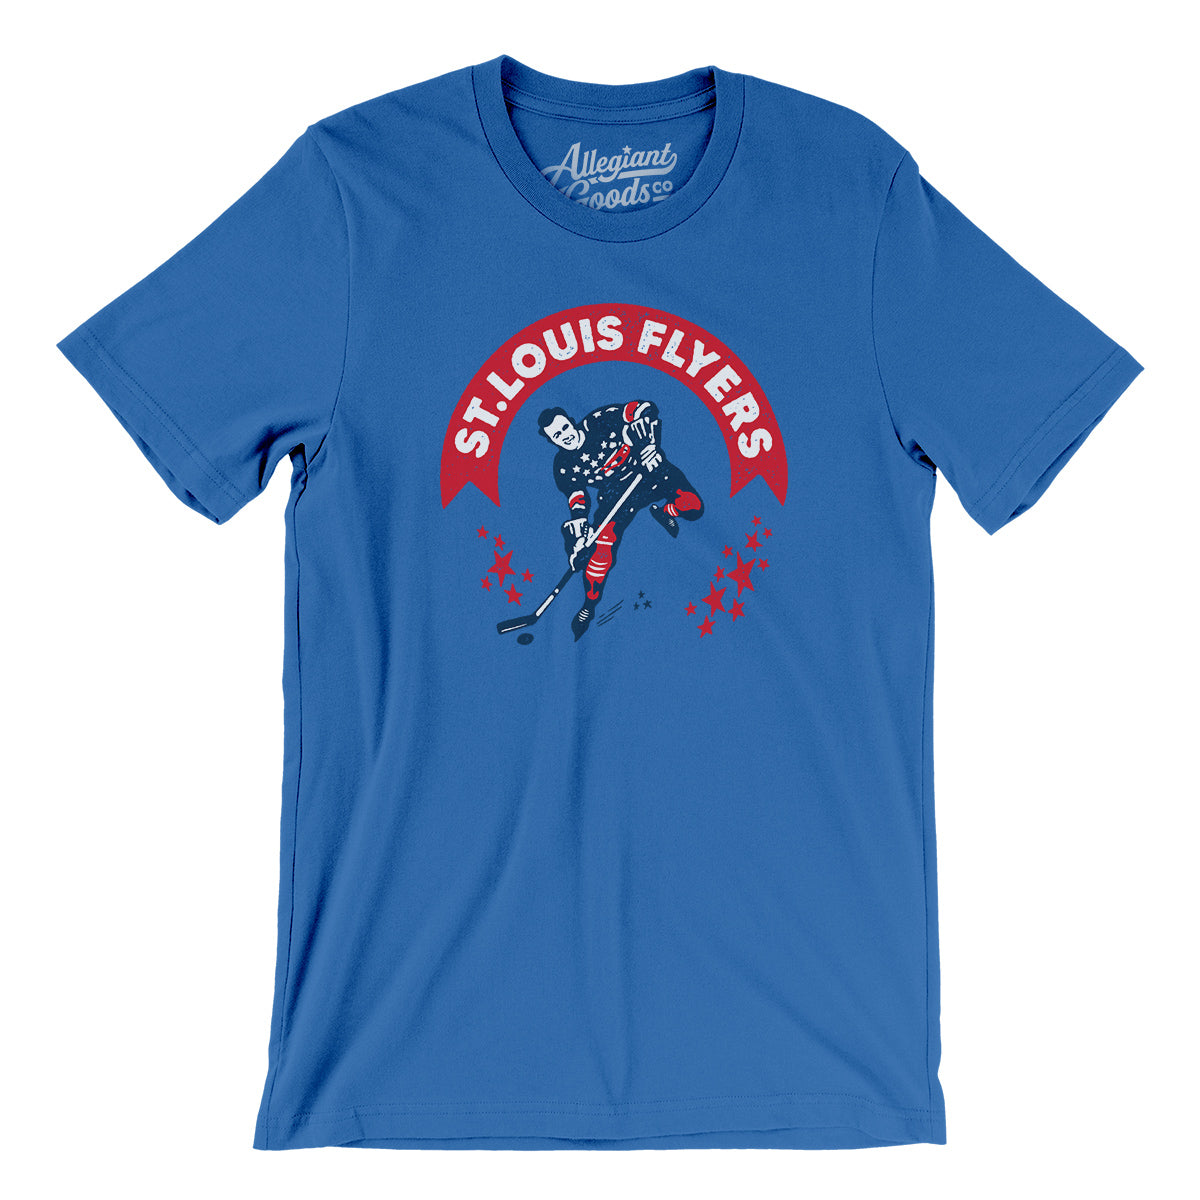 Play Gloria St. louis blues hockey t-shirt by To-Tee Clothing - Issuu